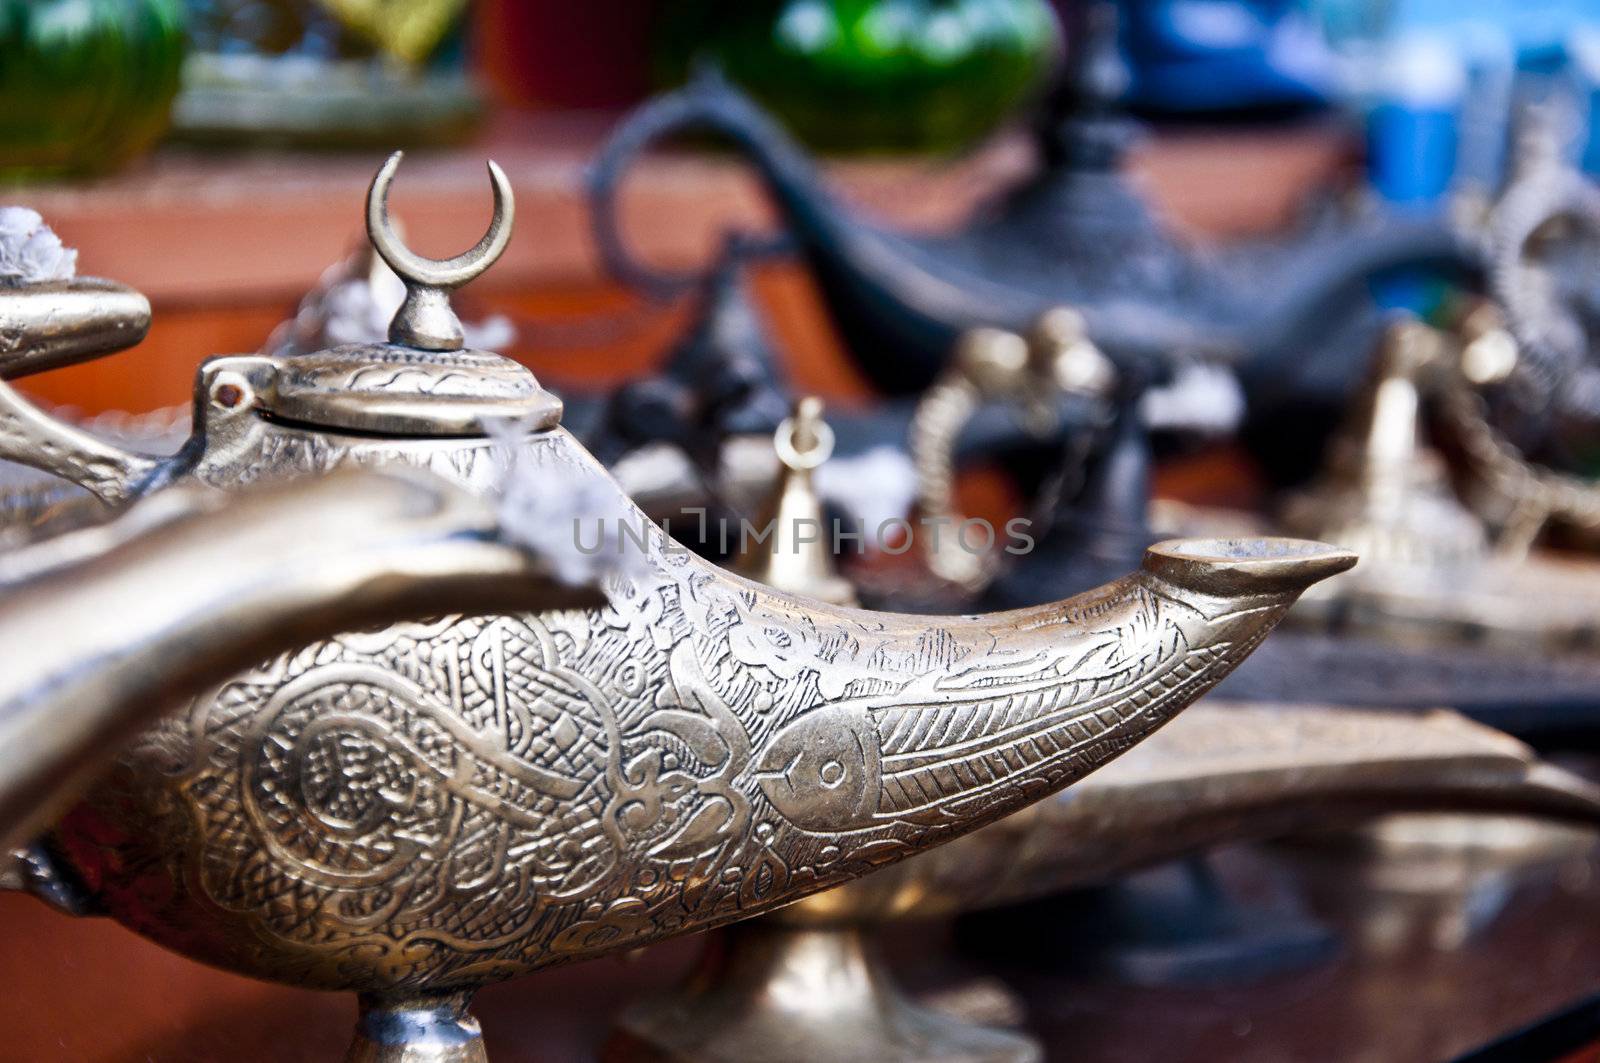 Aladdin's lamp, touristic souvenirs sold in old Grand Bazaar in Istanbul, Turkey